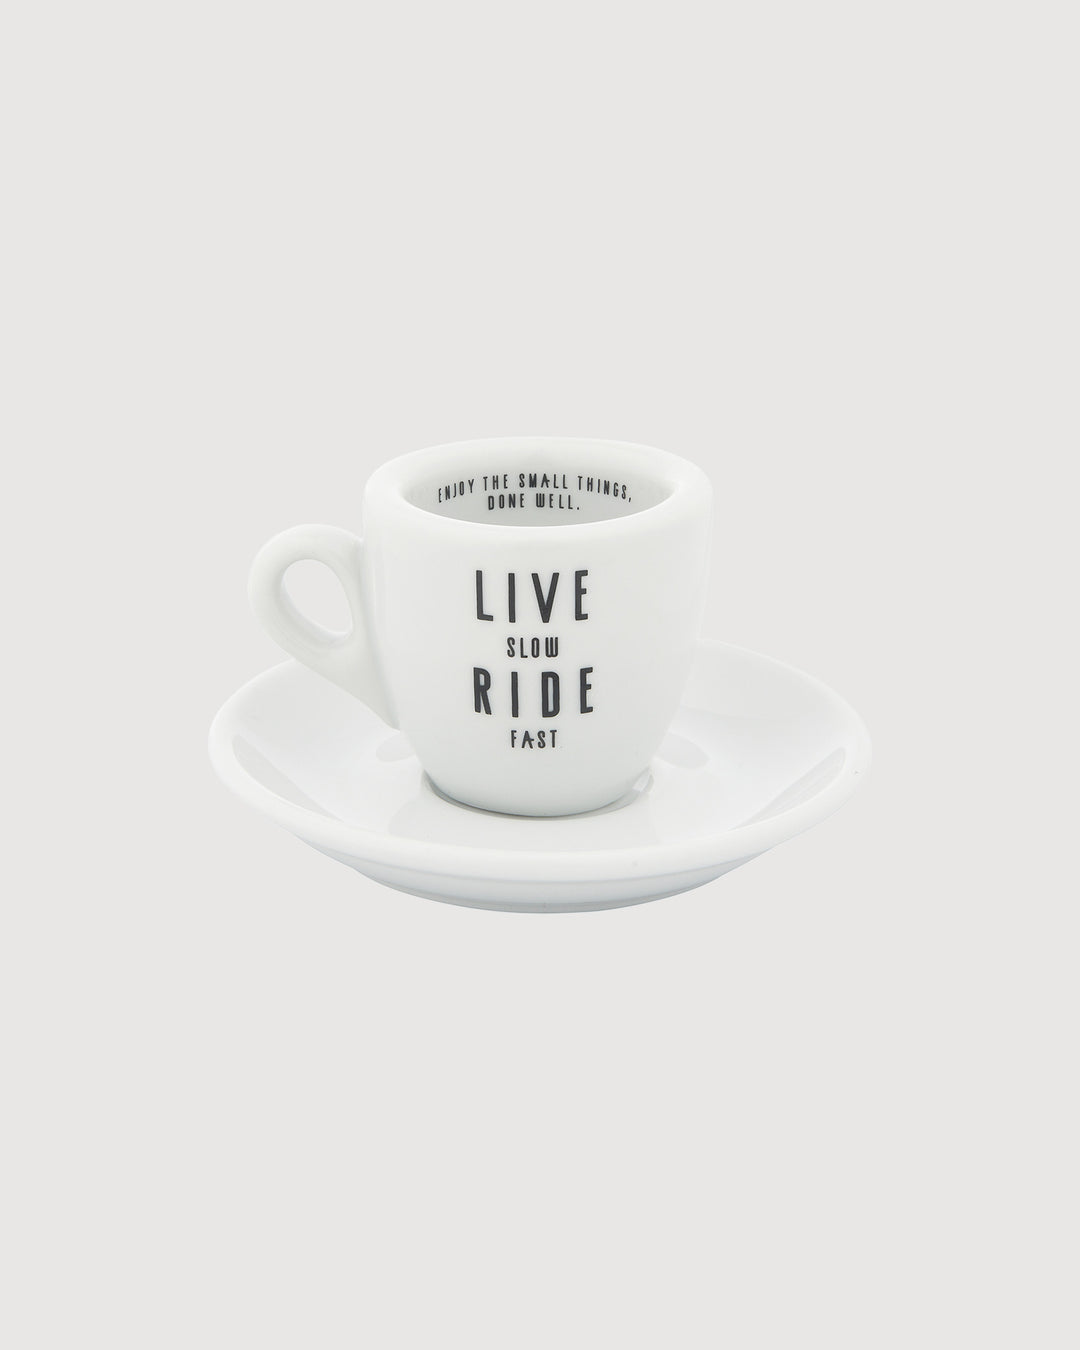 Live Slow Ride Fast Espresso set